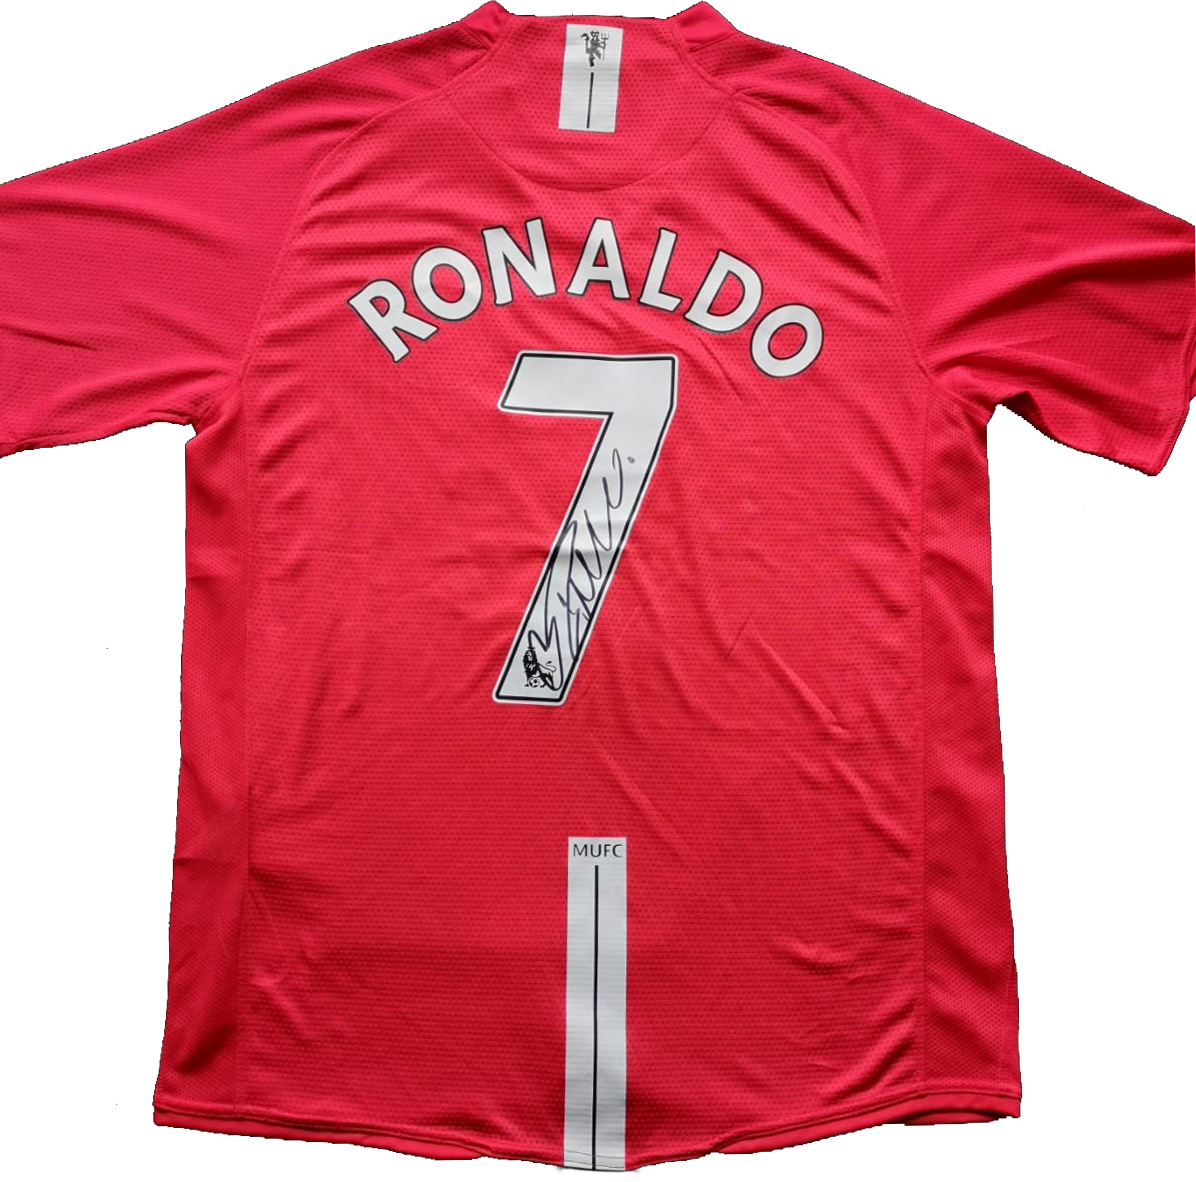 Cristiano Ronaldo Signed Manchester 